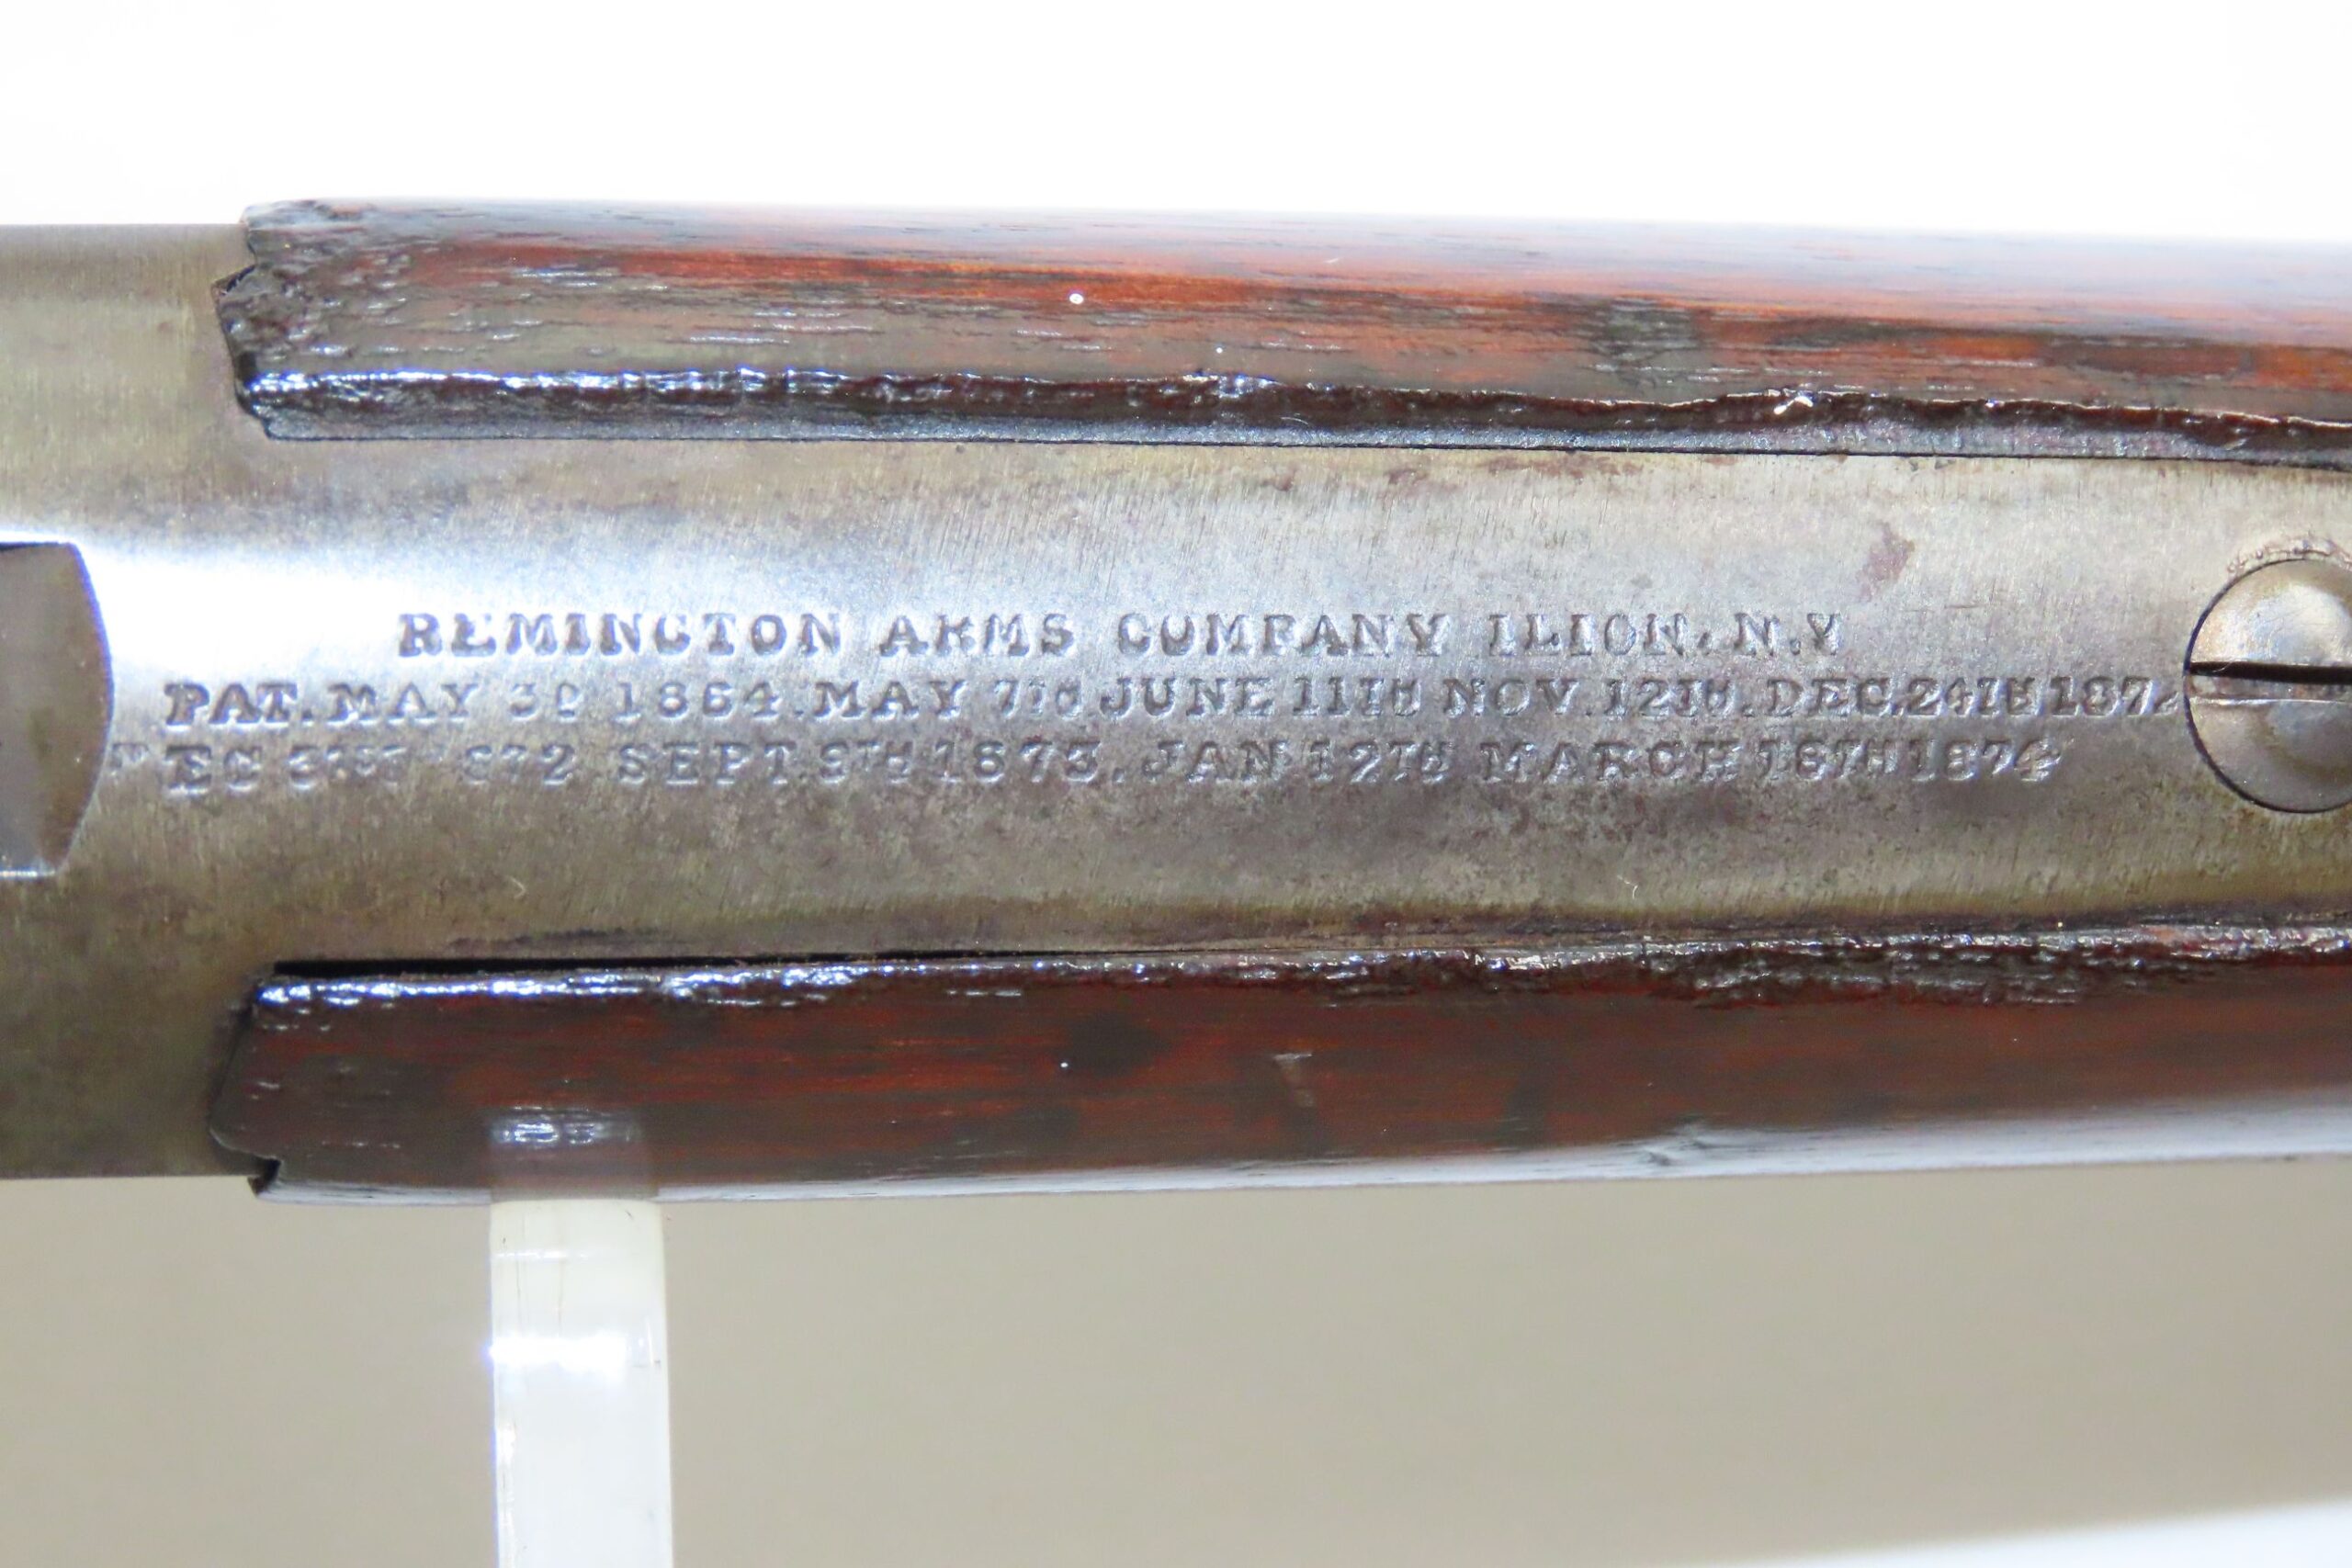 1864 remington rolling block rifle